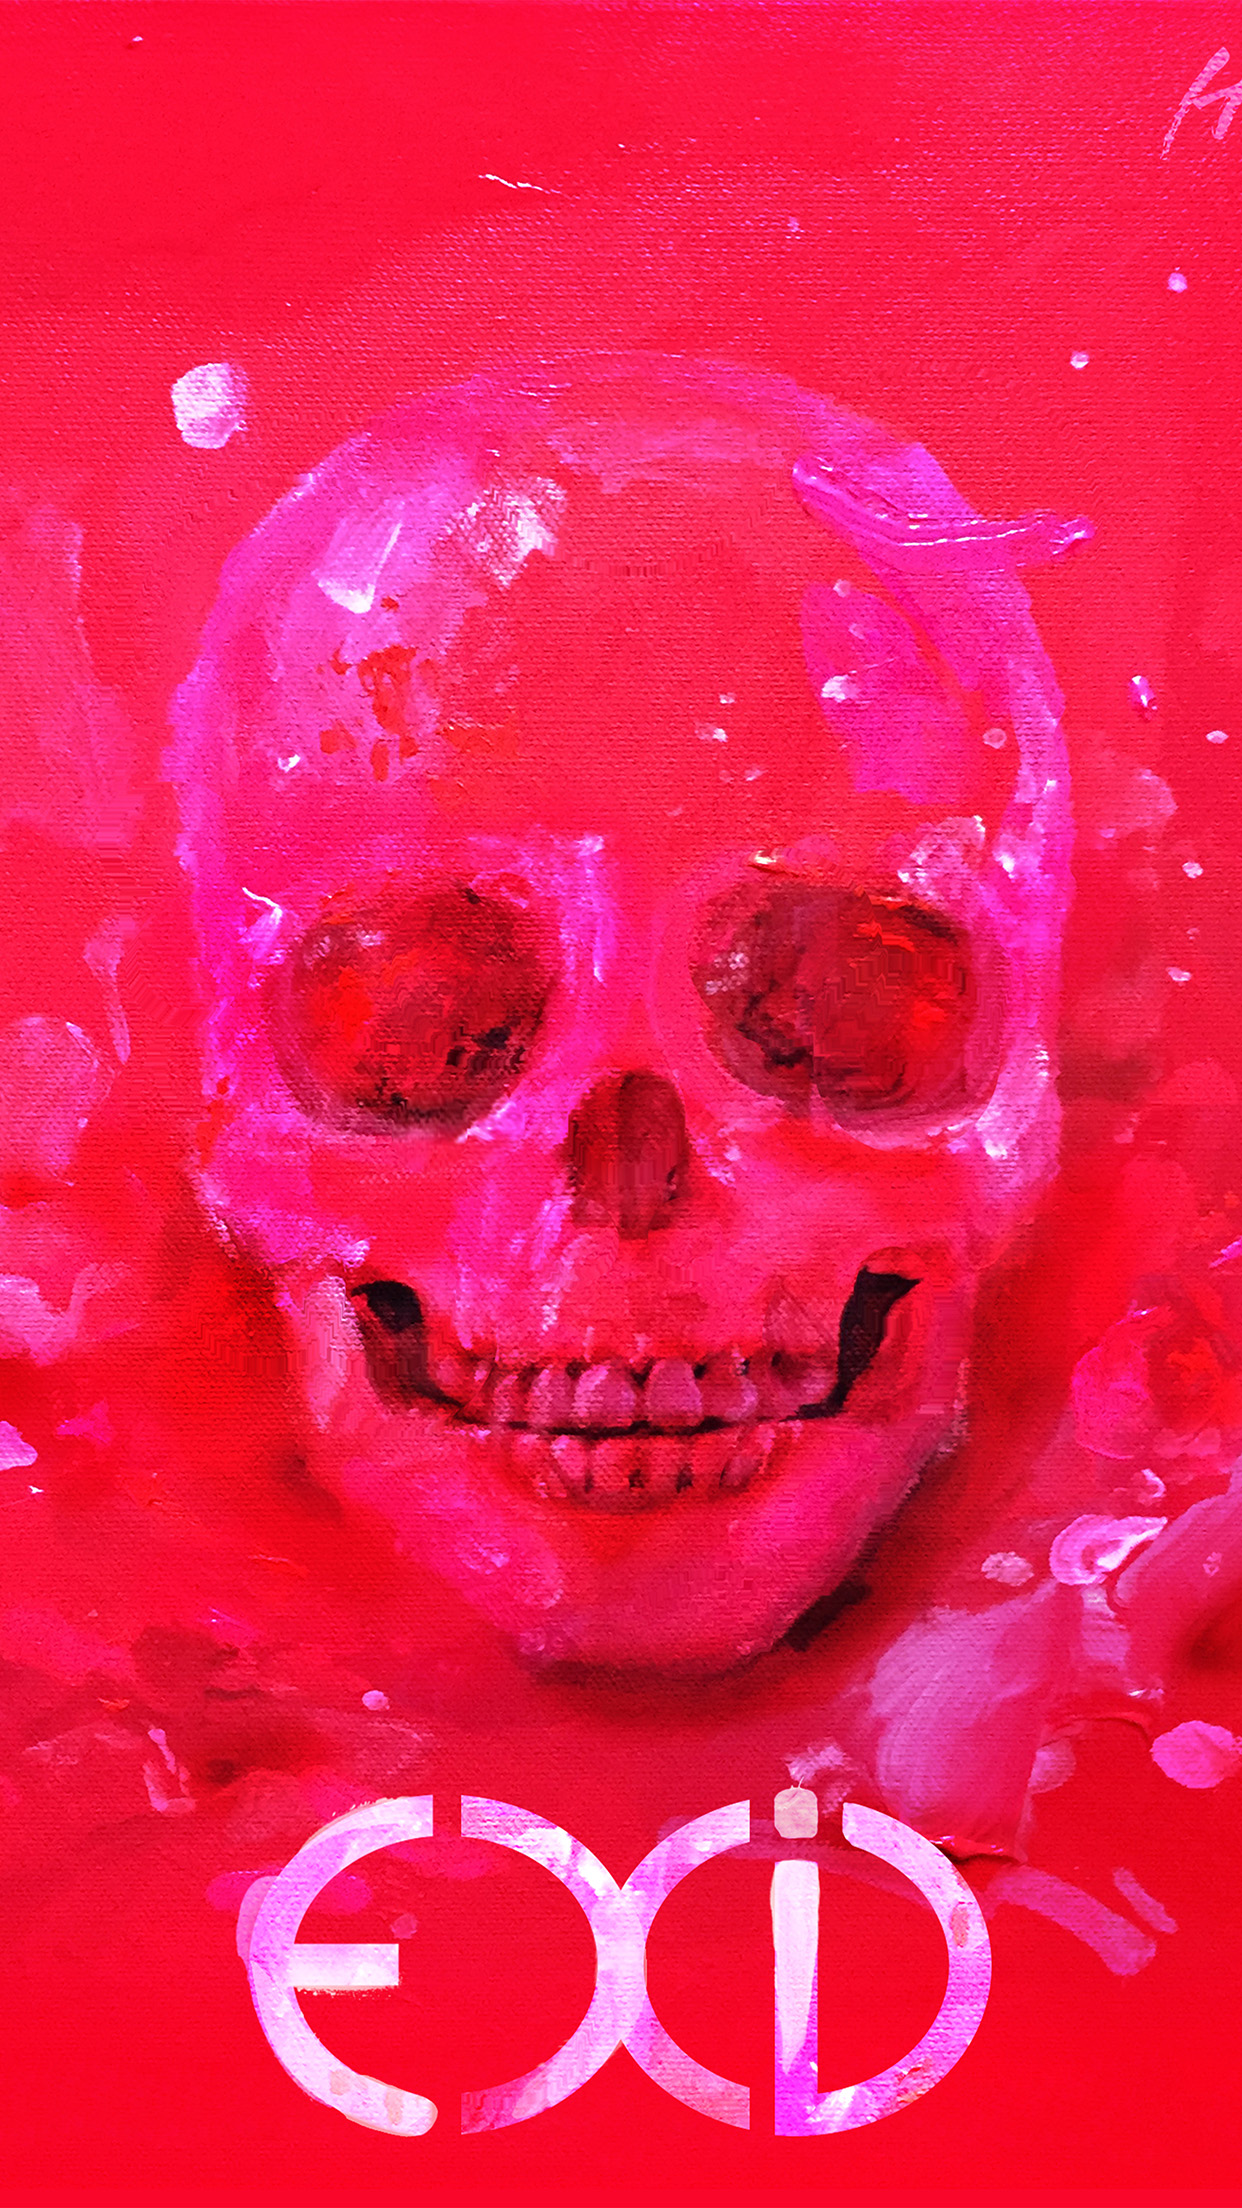 Kpop Exid Cover Skull Red Art Illustration Android wallpaper